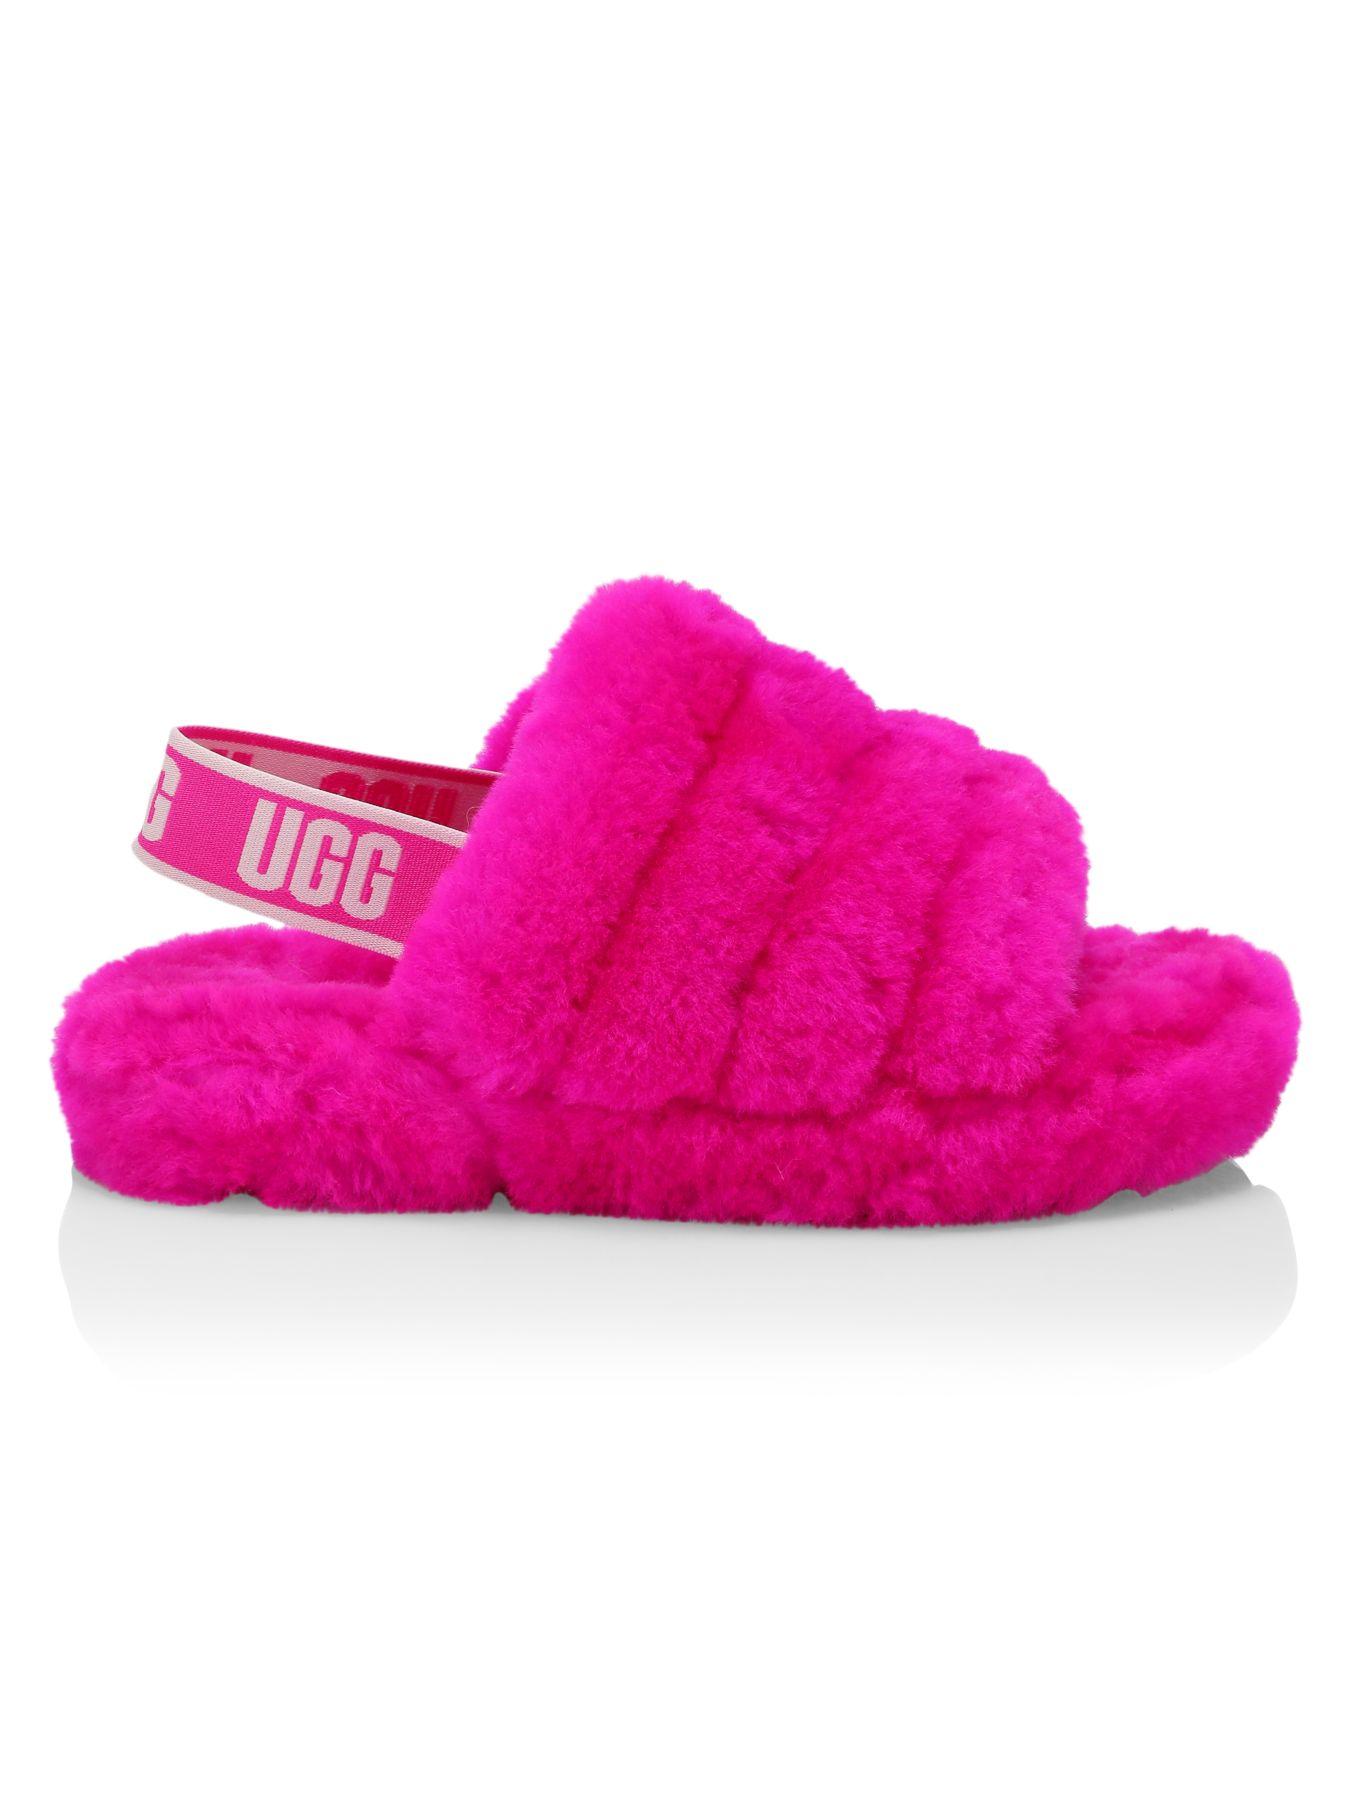 UGG Fur Fluff Yeah Sheepskin Slingback Slippers in Pink - Lyst